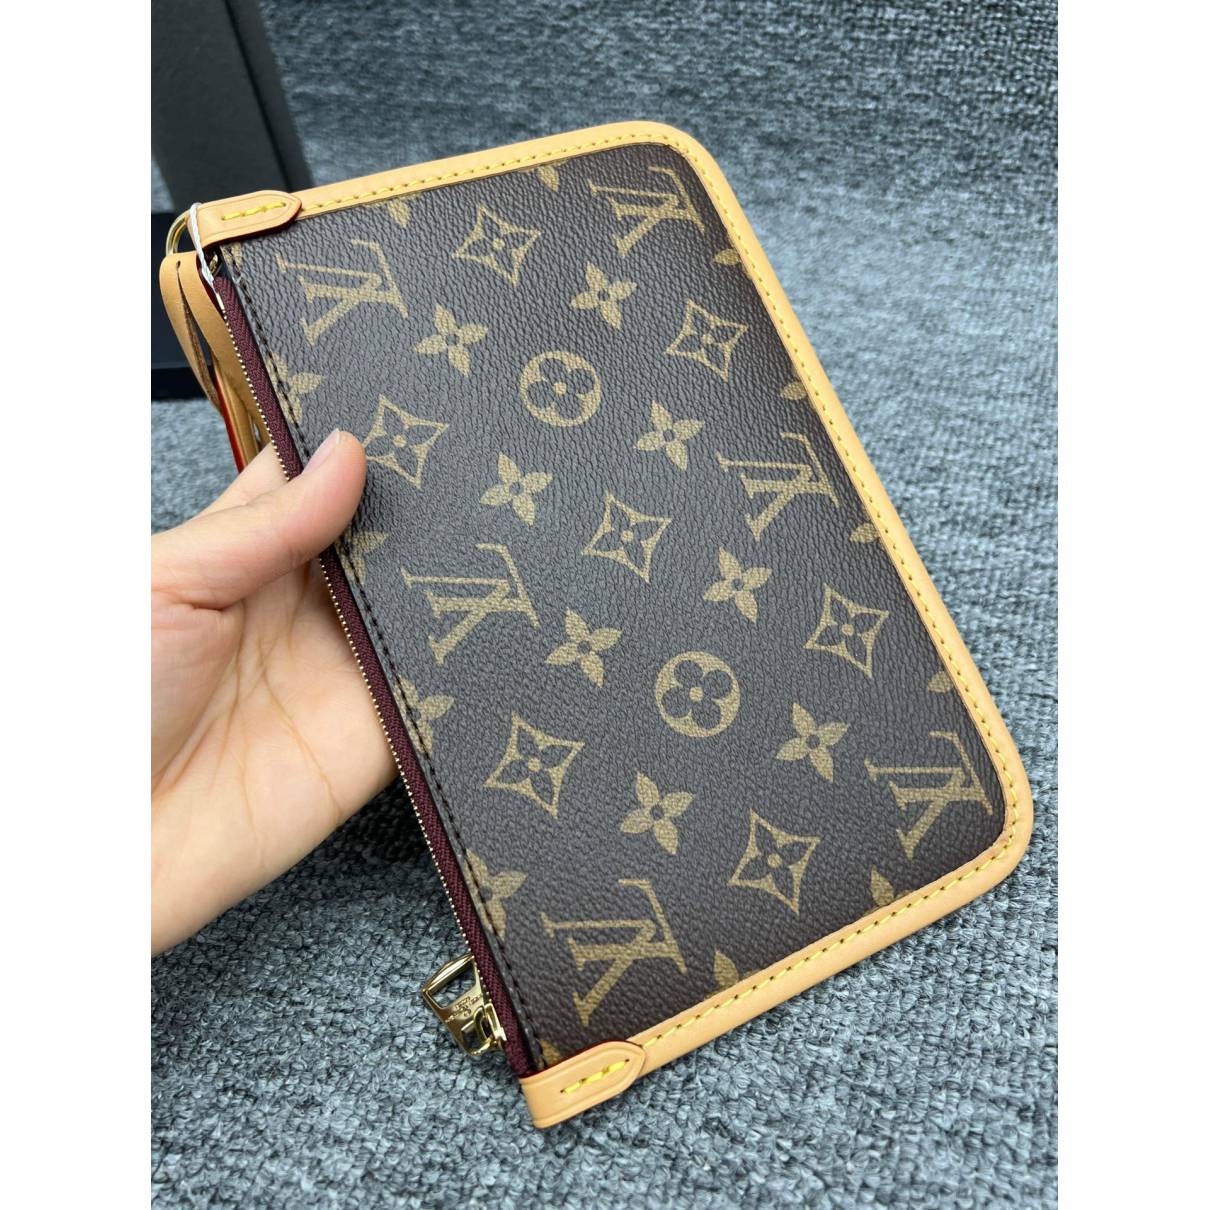 Louis Vuitton Authenticated Carry All Handbag